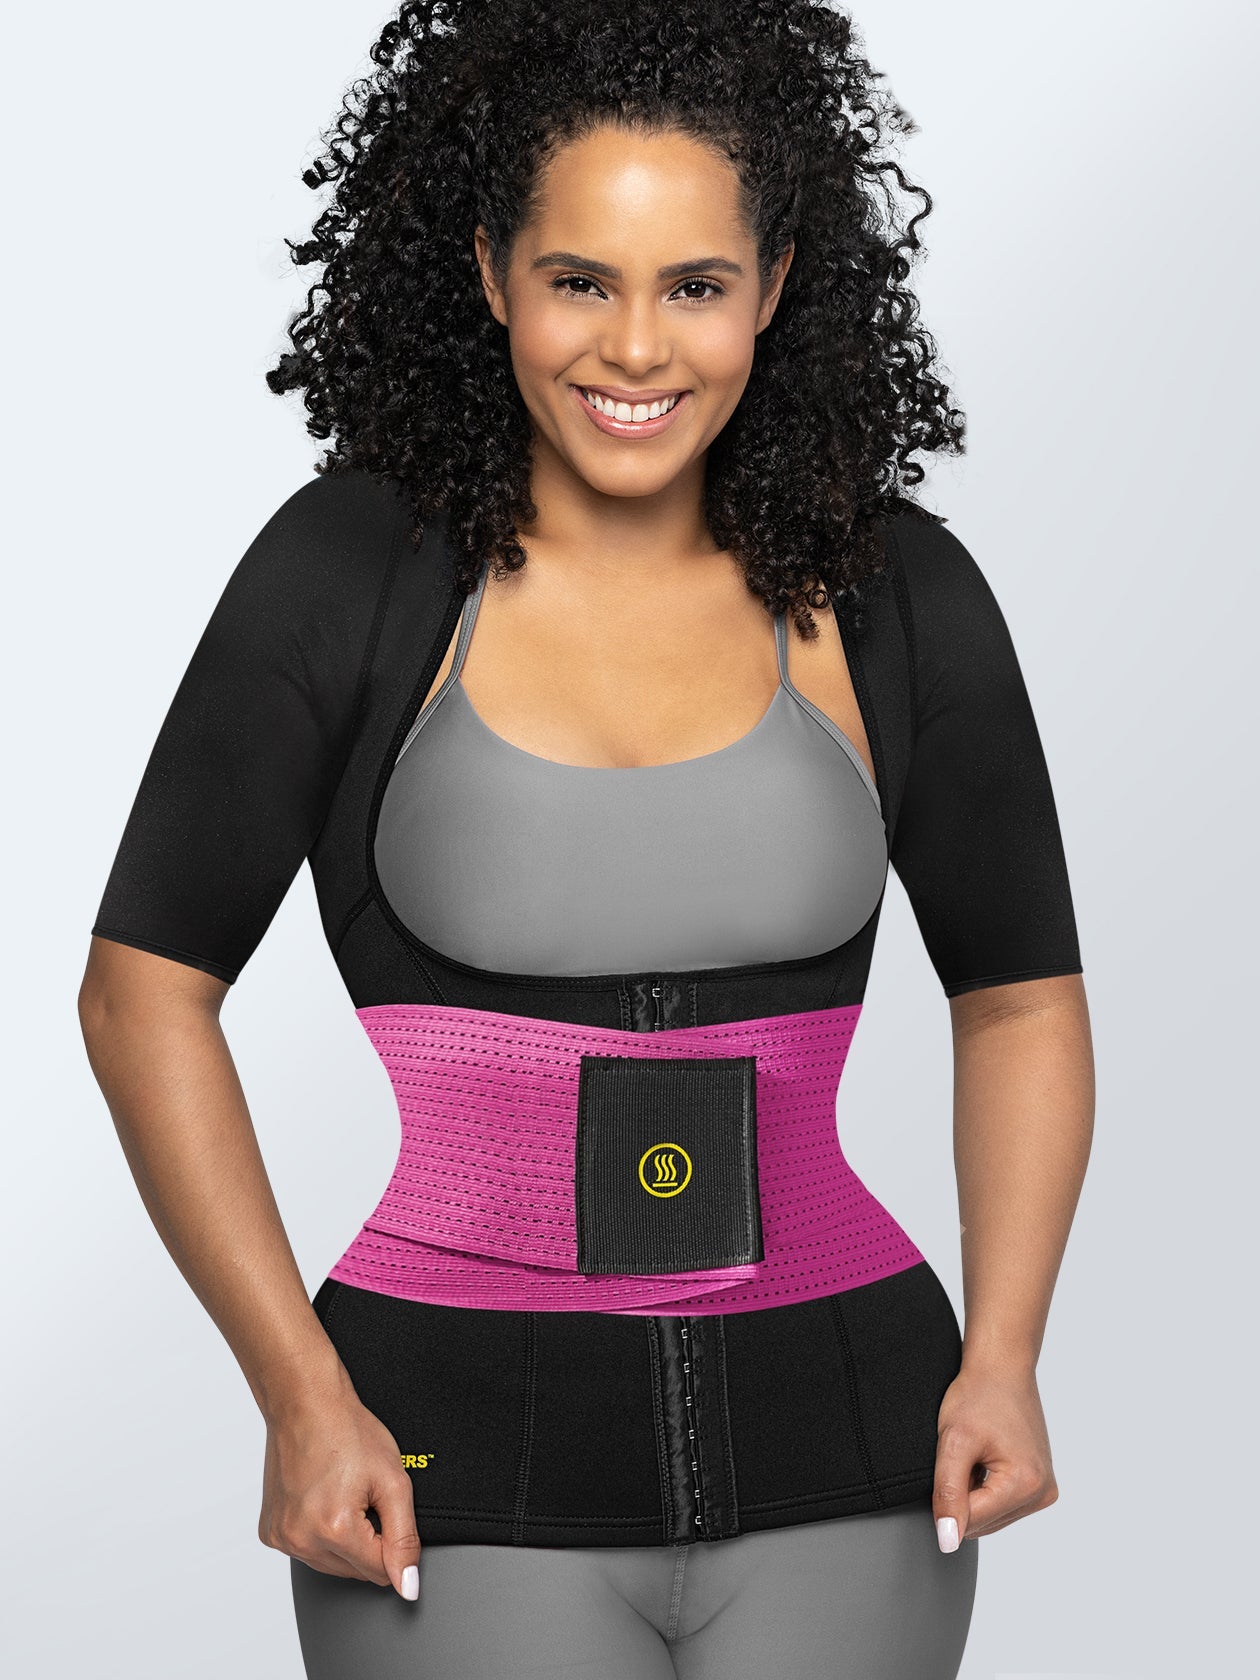 Shape your waist into a stunning hourglass figure with Cami Hot Waist  Cincher + Waist Trainer 🙌 . Head to www.hotshapers.com . . . . #athome  #workout